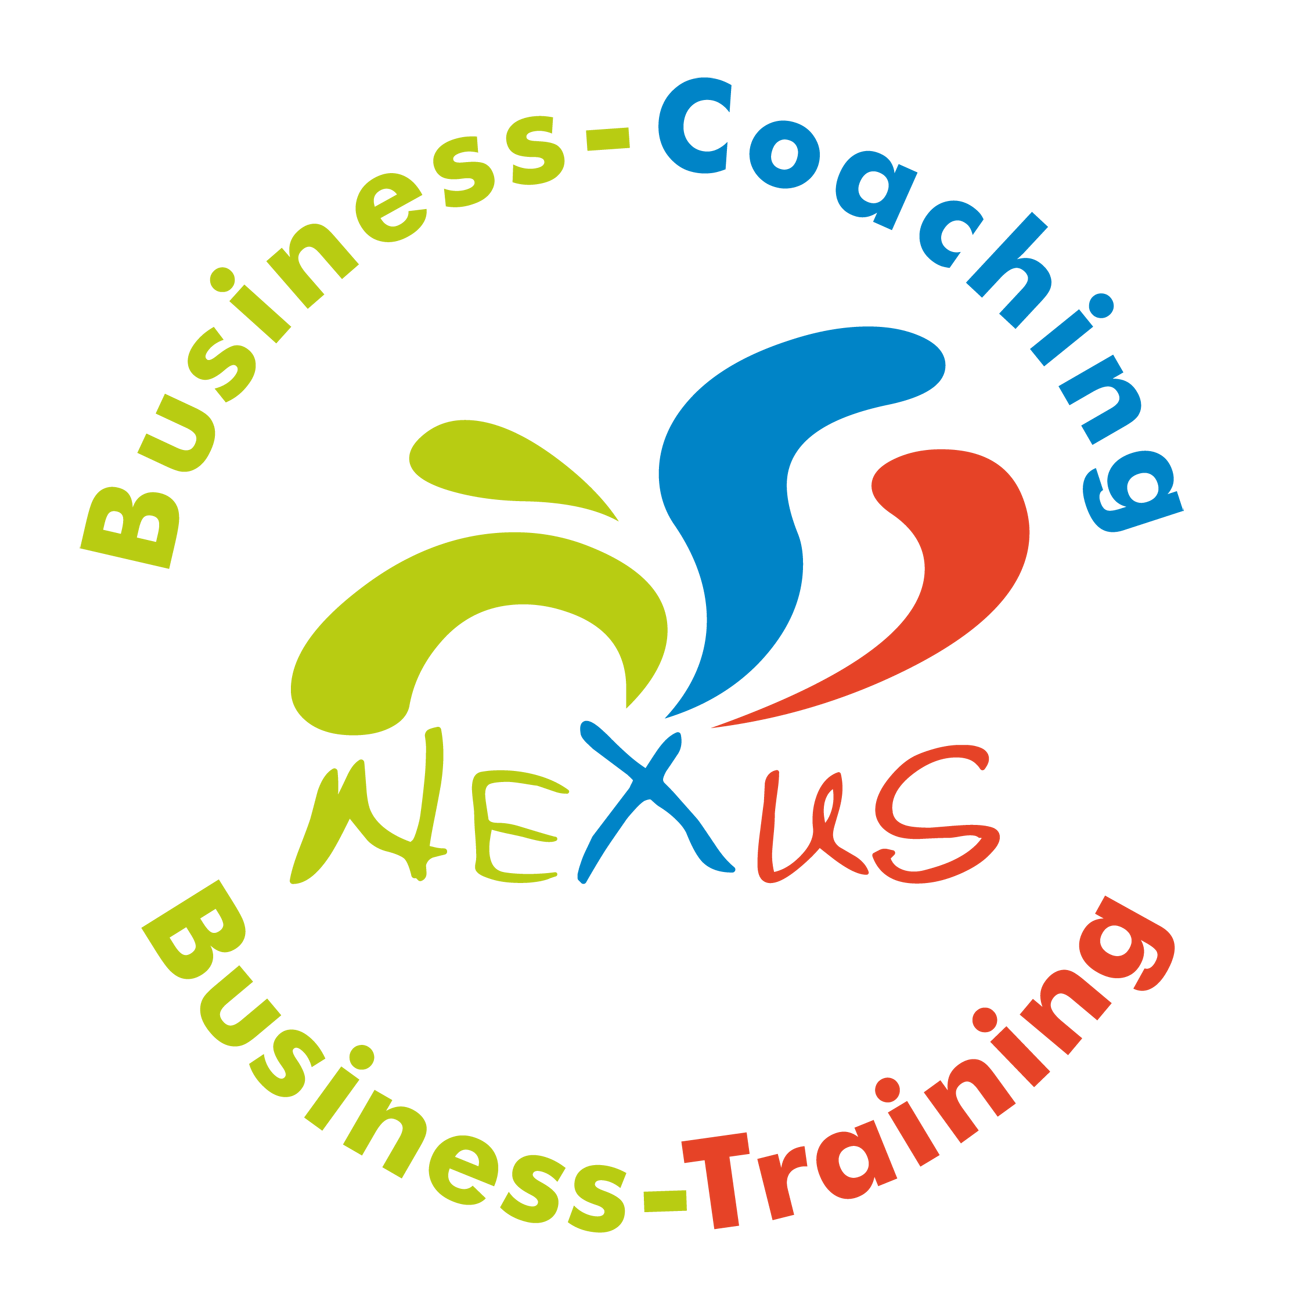 Business-Coaching Pirmasens, Business-Einzelcoaching, Business-Training, Führungskräfte-Coaching Pirmasens, Führungskräfte-Training, Kommunikationstraining, Persönlichkeitstraining